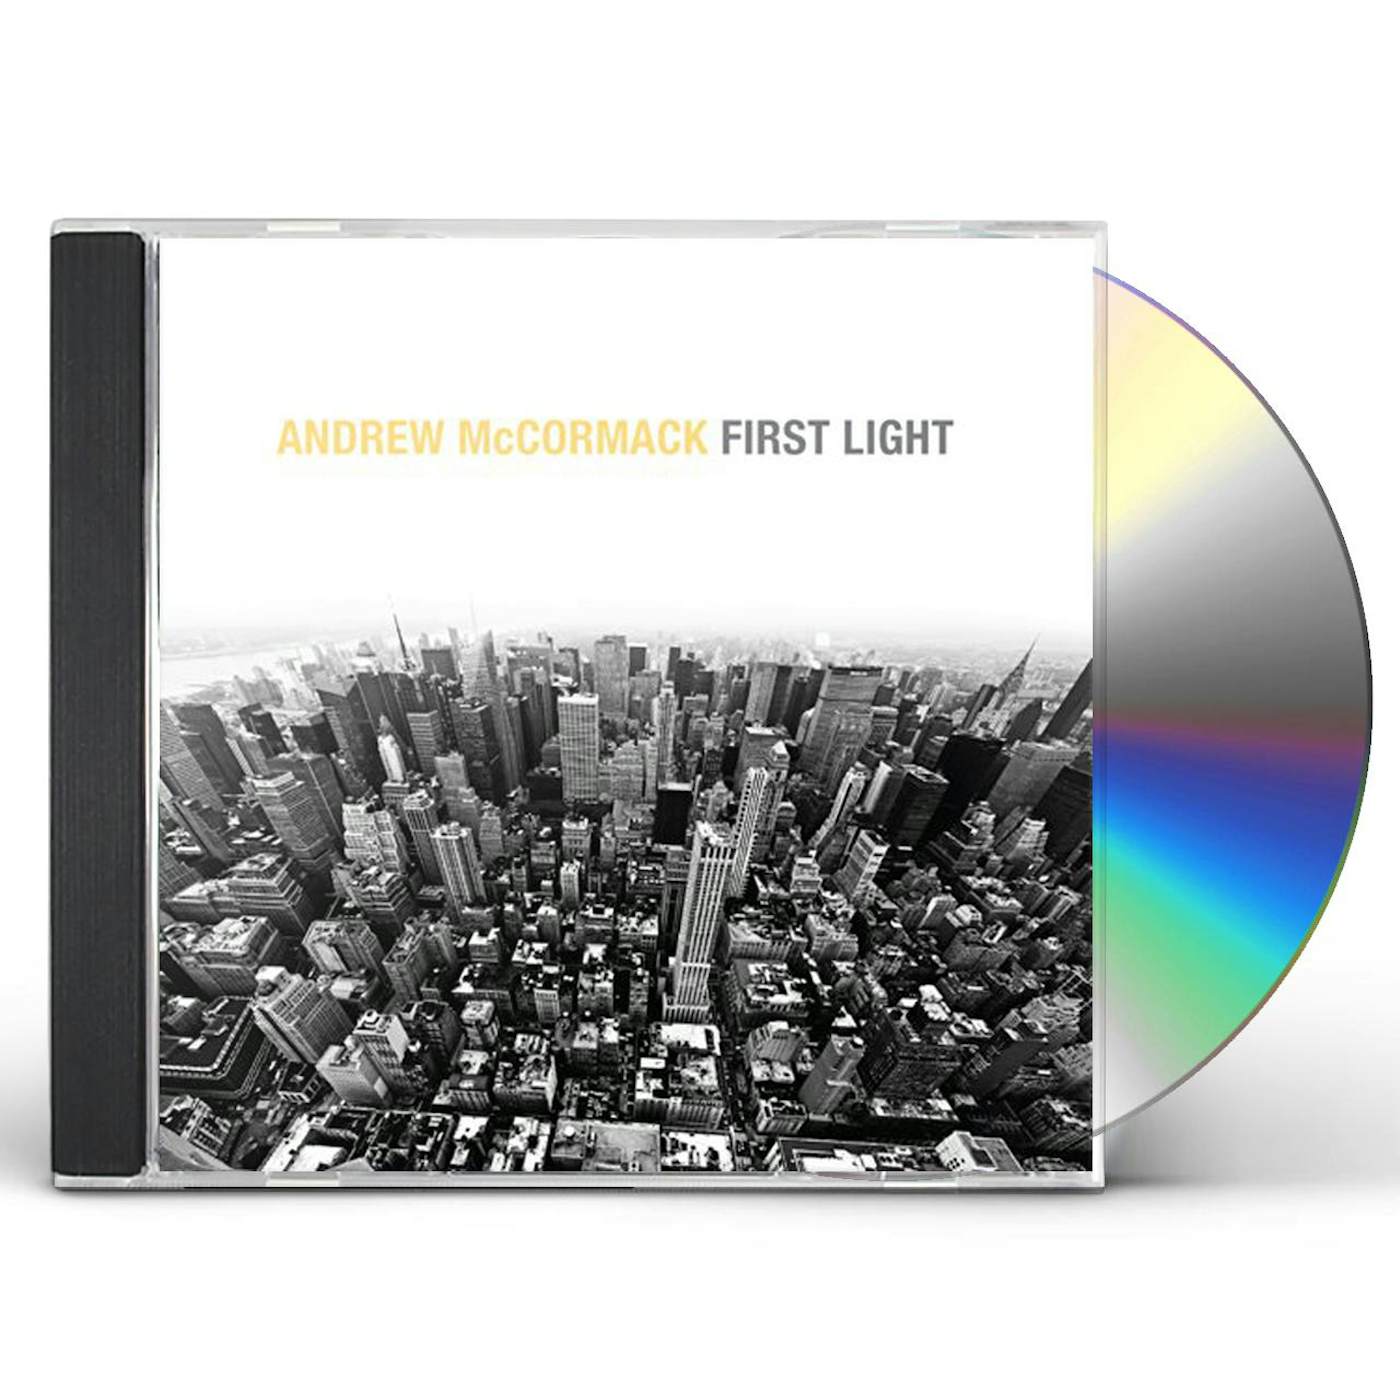 Andrew McCormack FIRST LIGHT CD